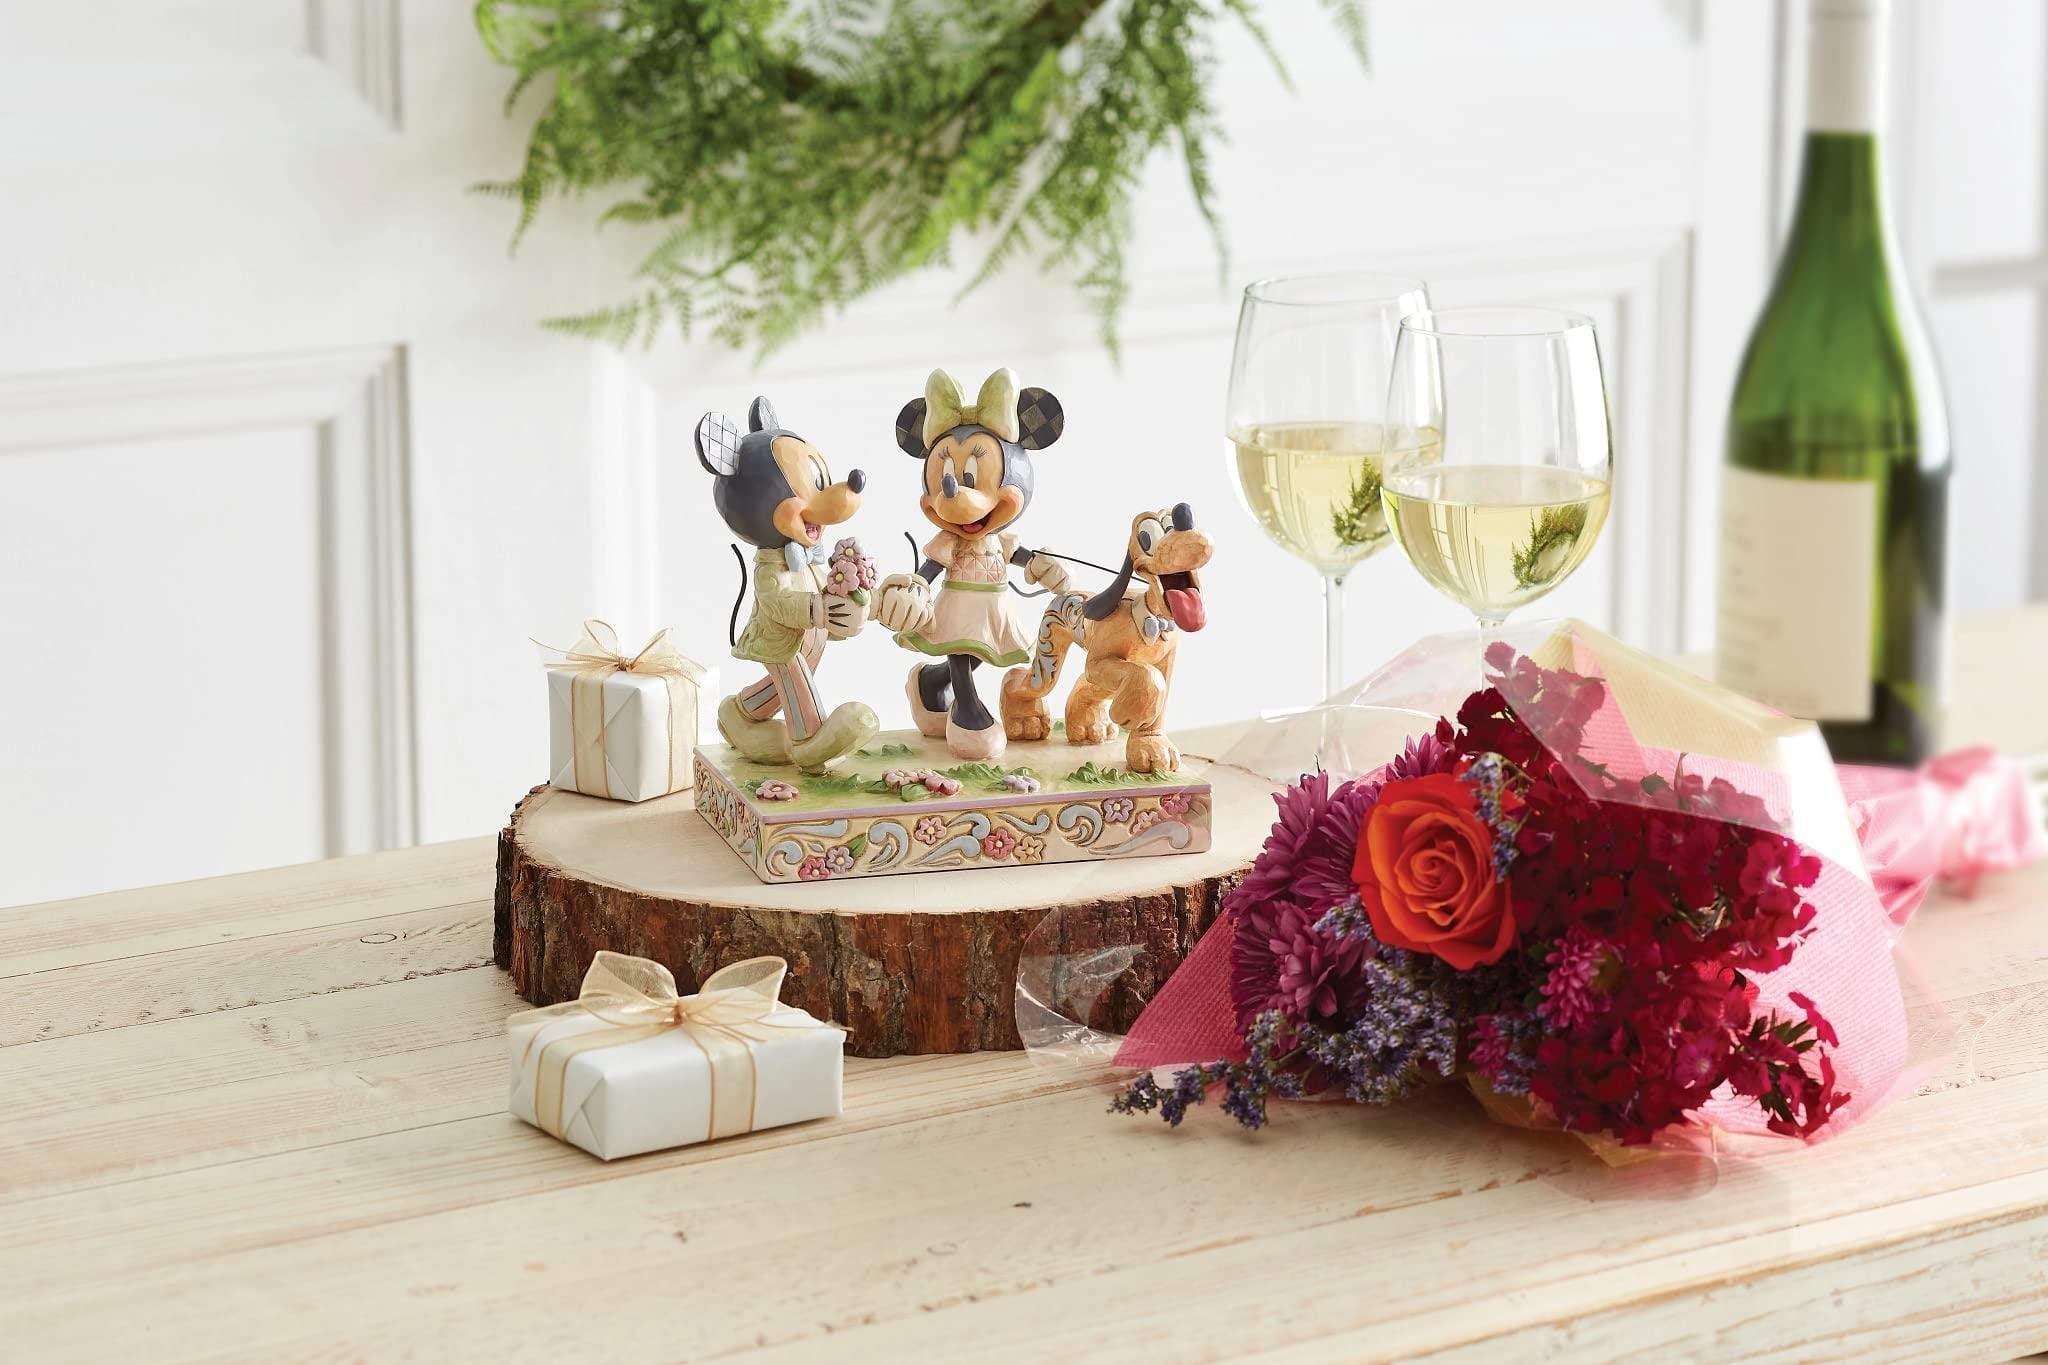 Enesco Disney Ornament Disney Traditions Figurine - Spring Mickey, Minnie and Pluto Figurine